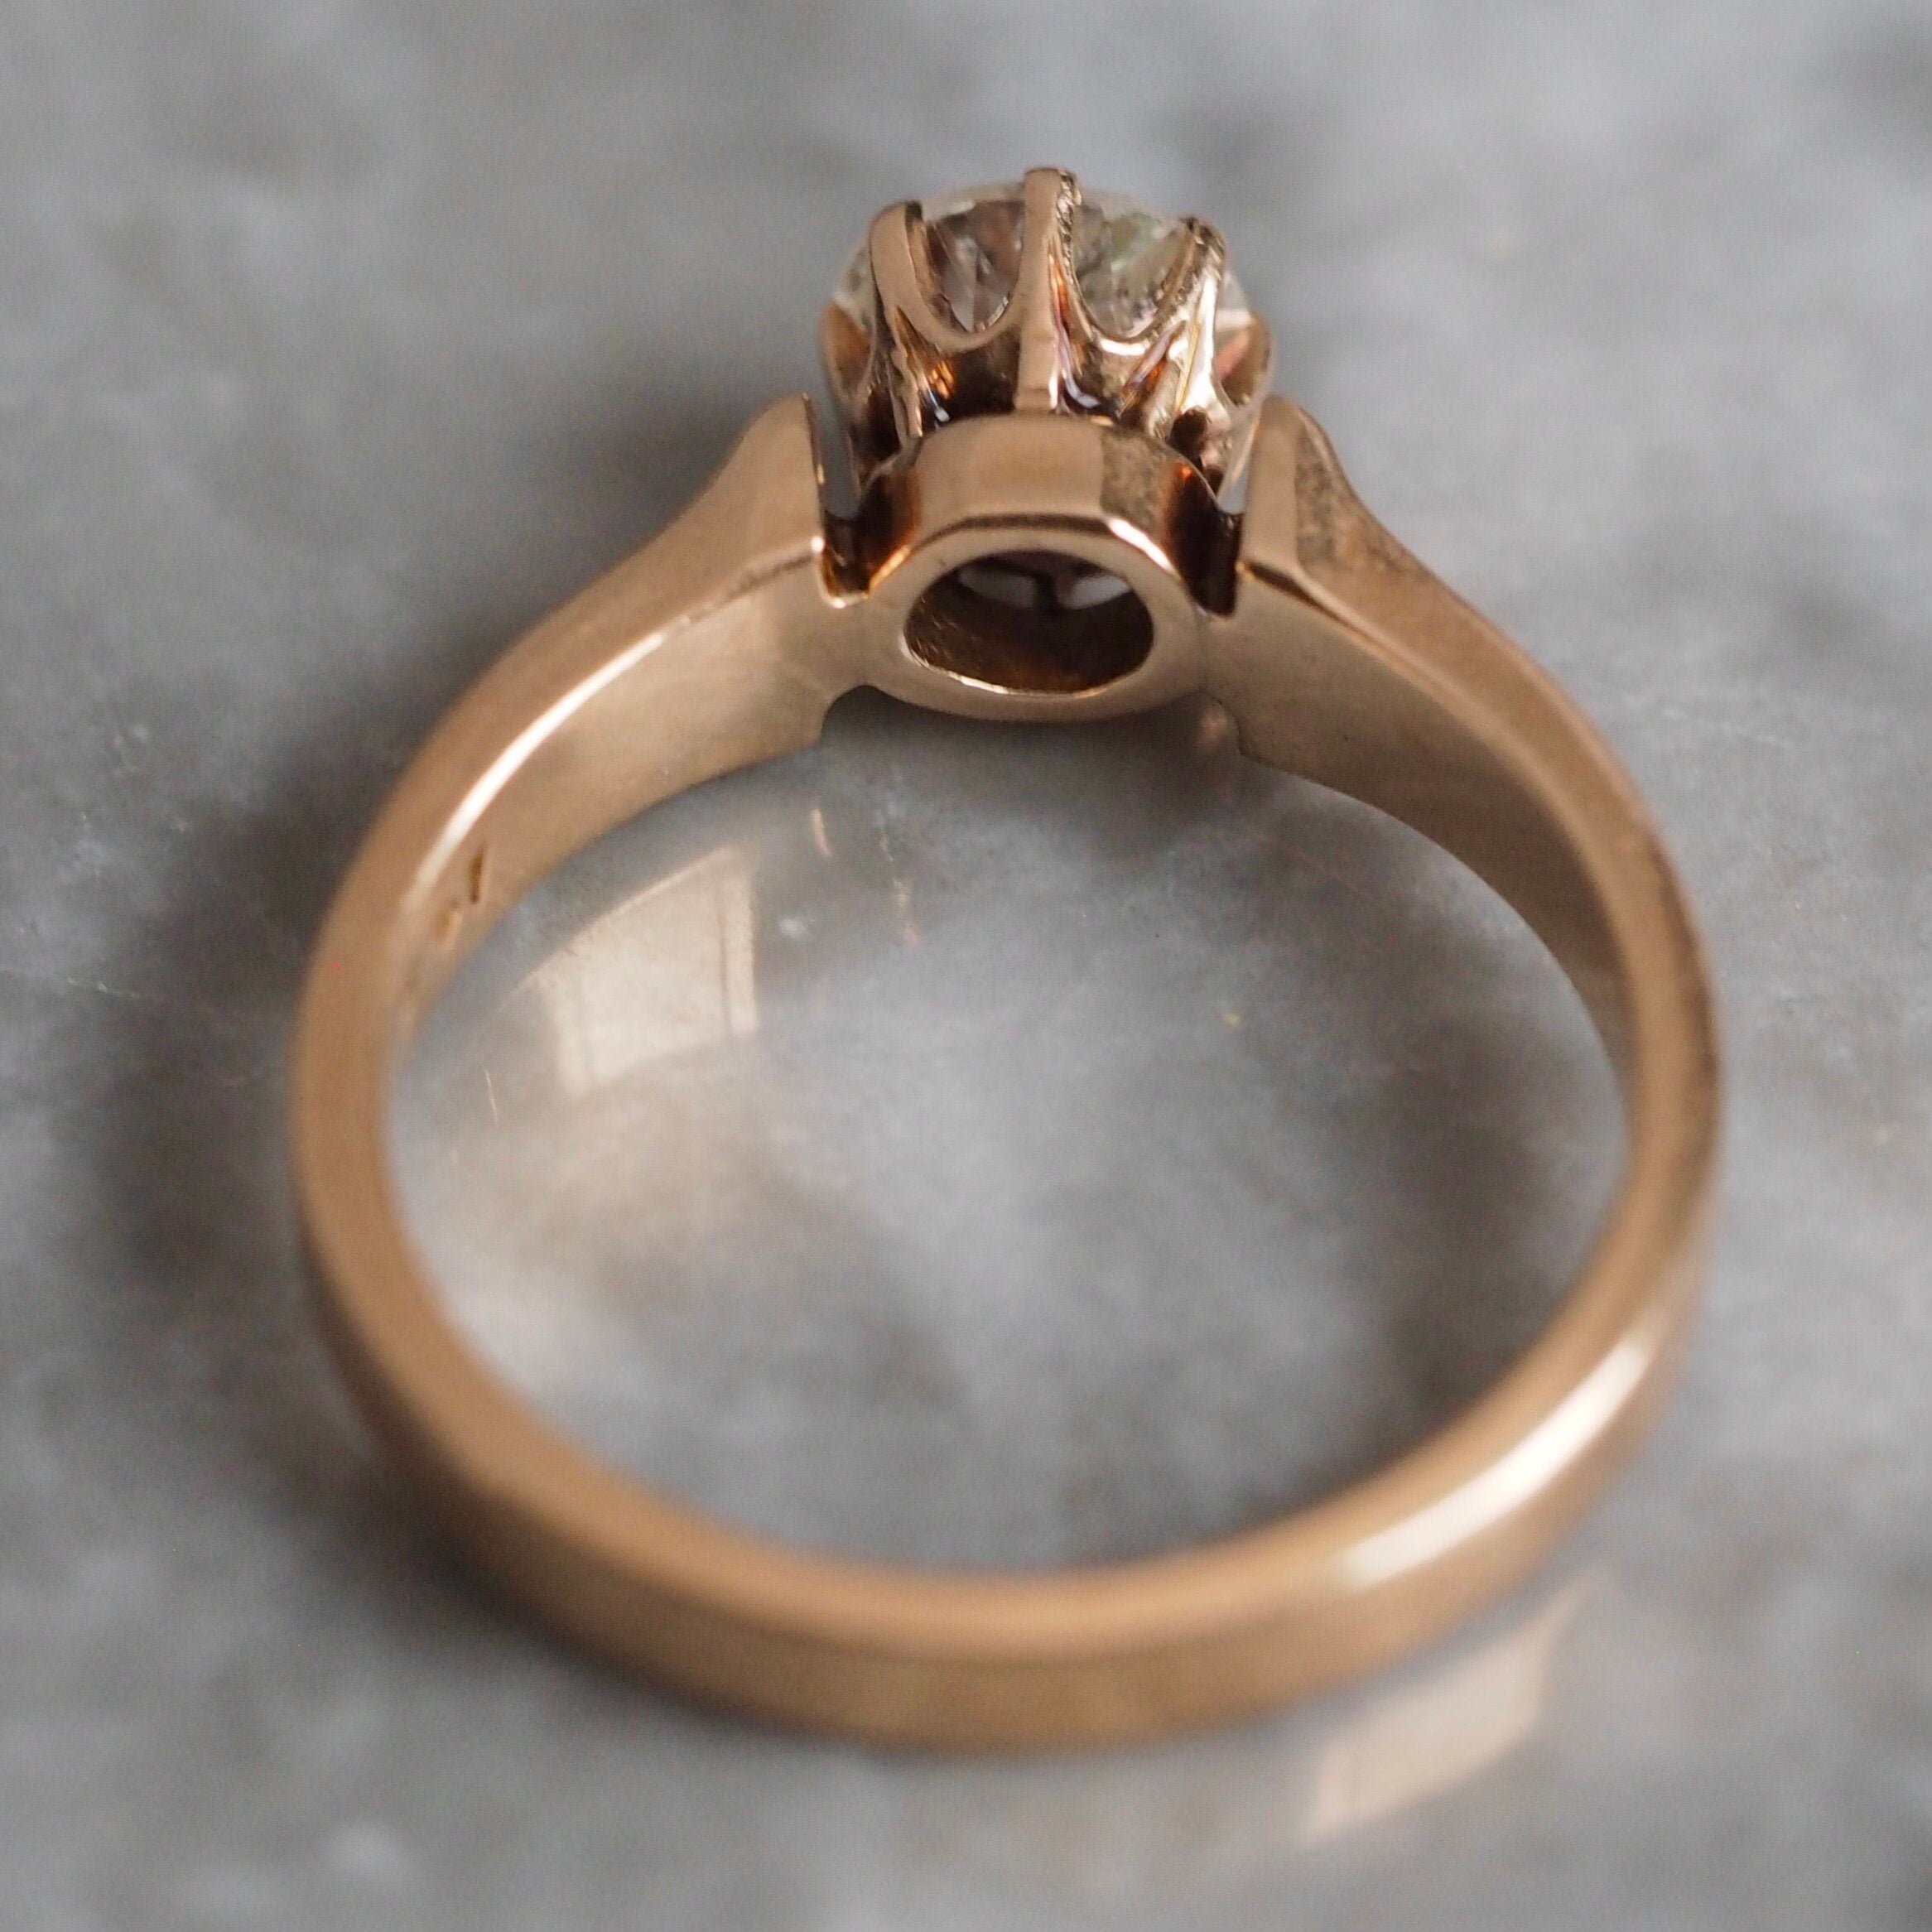 Antique c. 1886 14k Gold Old Mine Cut Diamond Ring